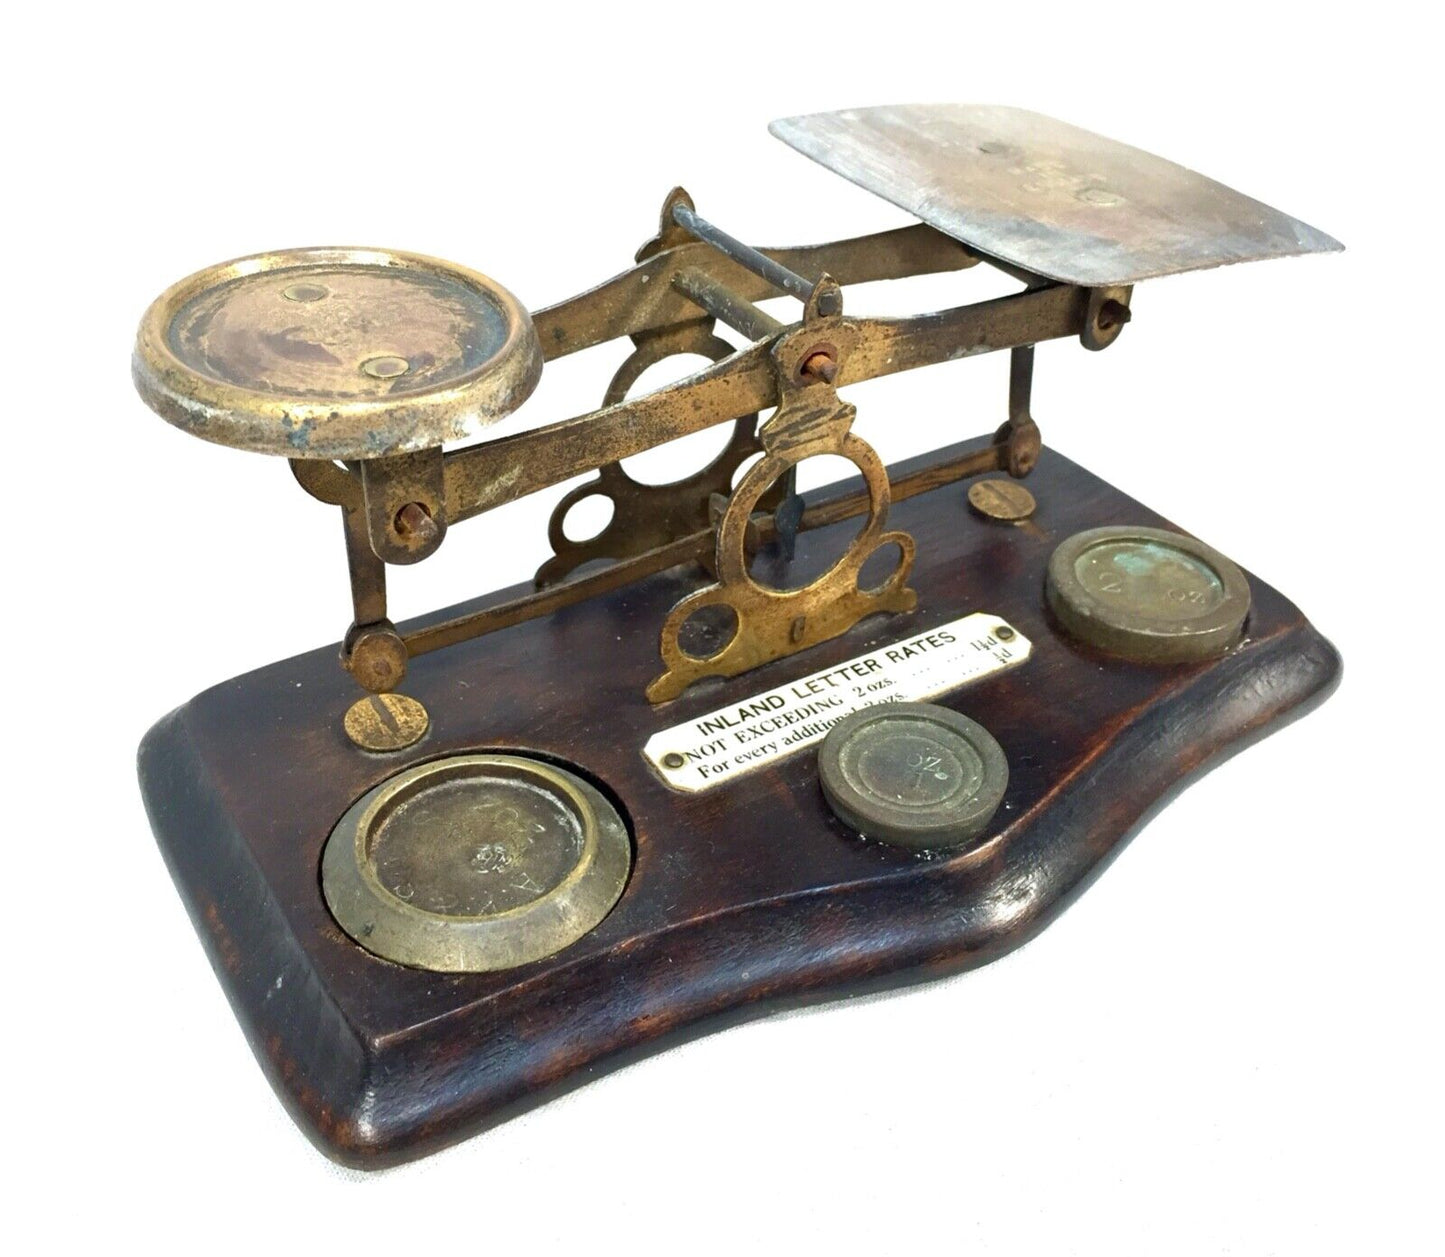 Antique Brass Postal Letter Scales on Wooden Oak Base / Weights / c.1900